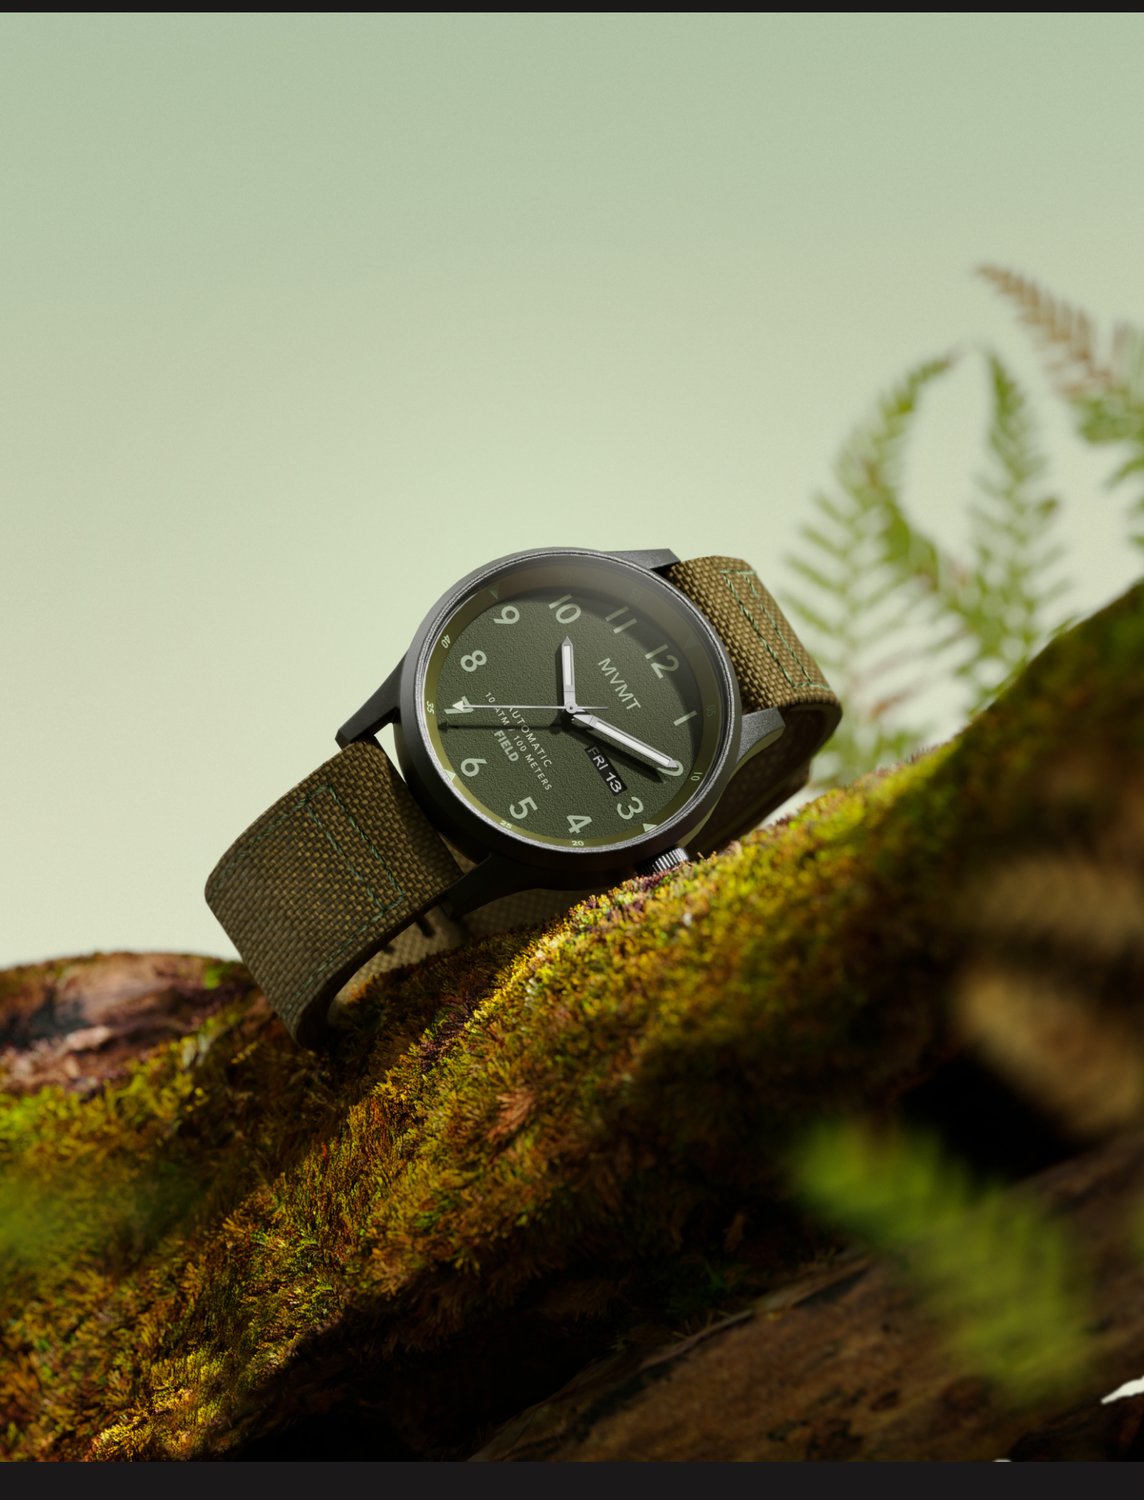 Field watch lying on a bed of moss